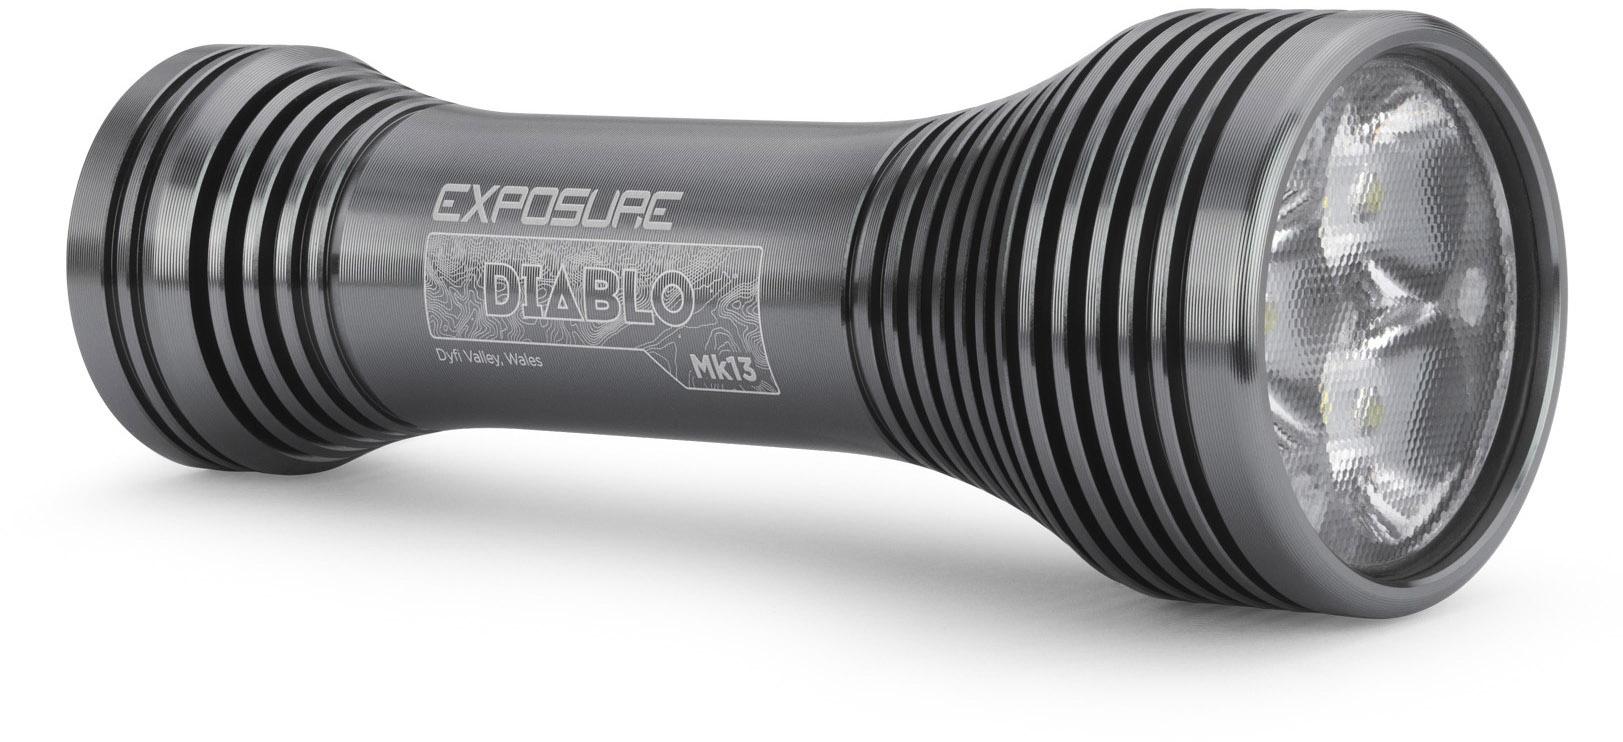 Exposure Diablo Mk13 Front Light - Gun Metal Black